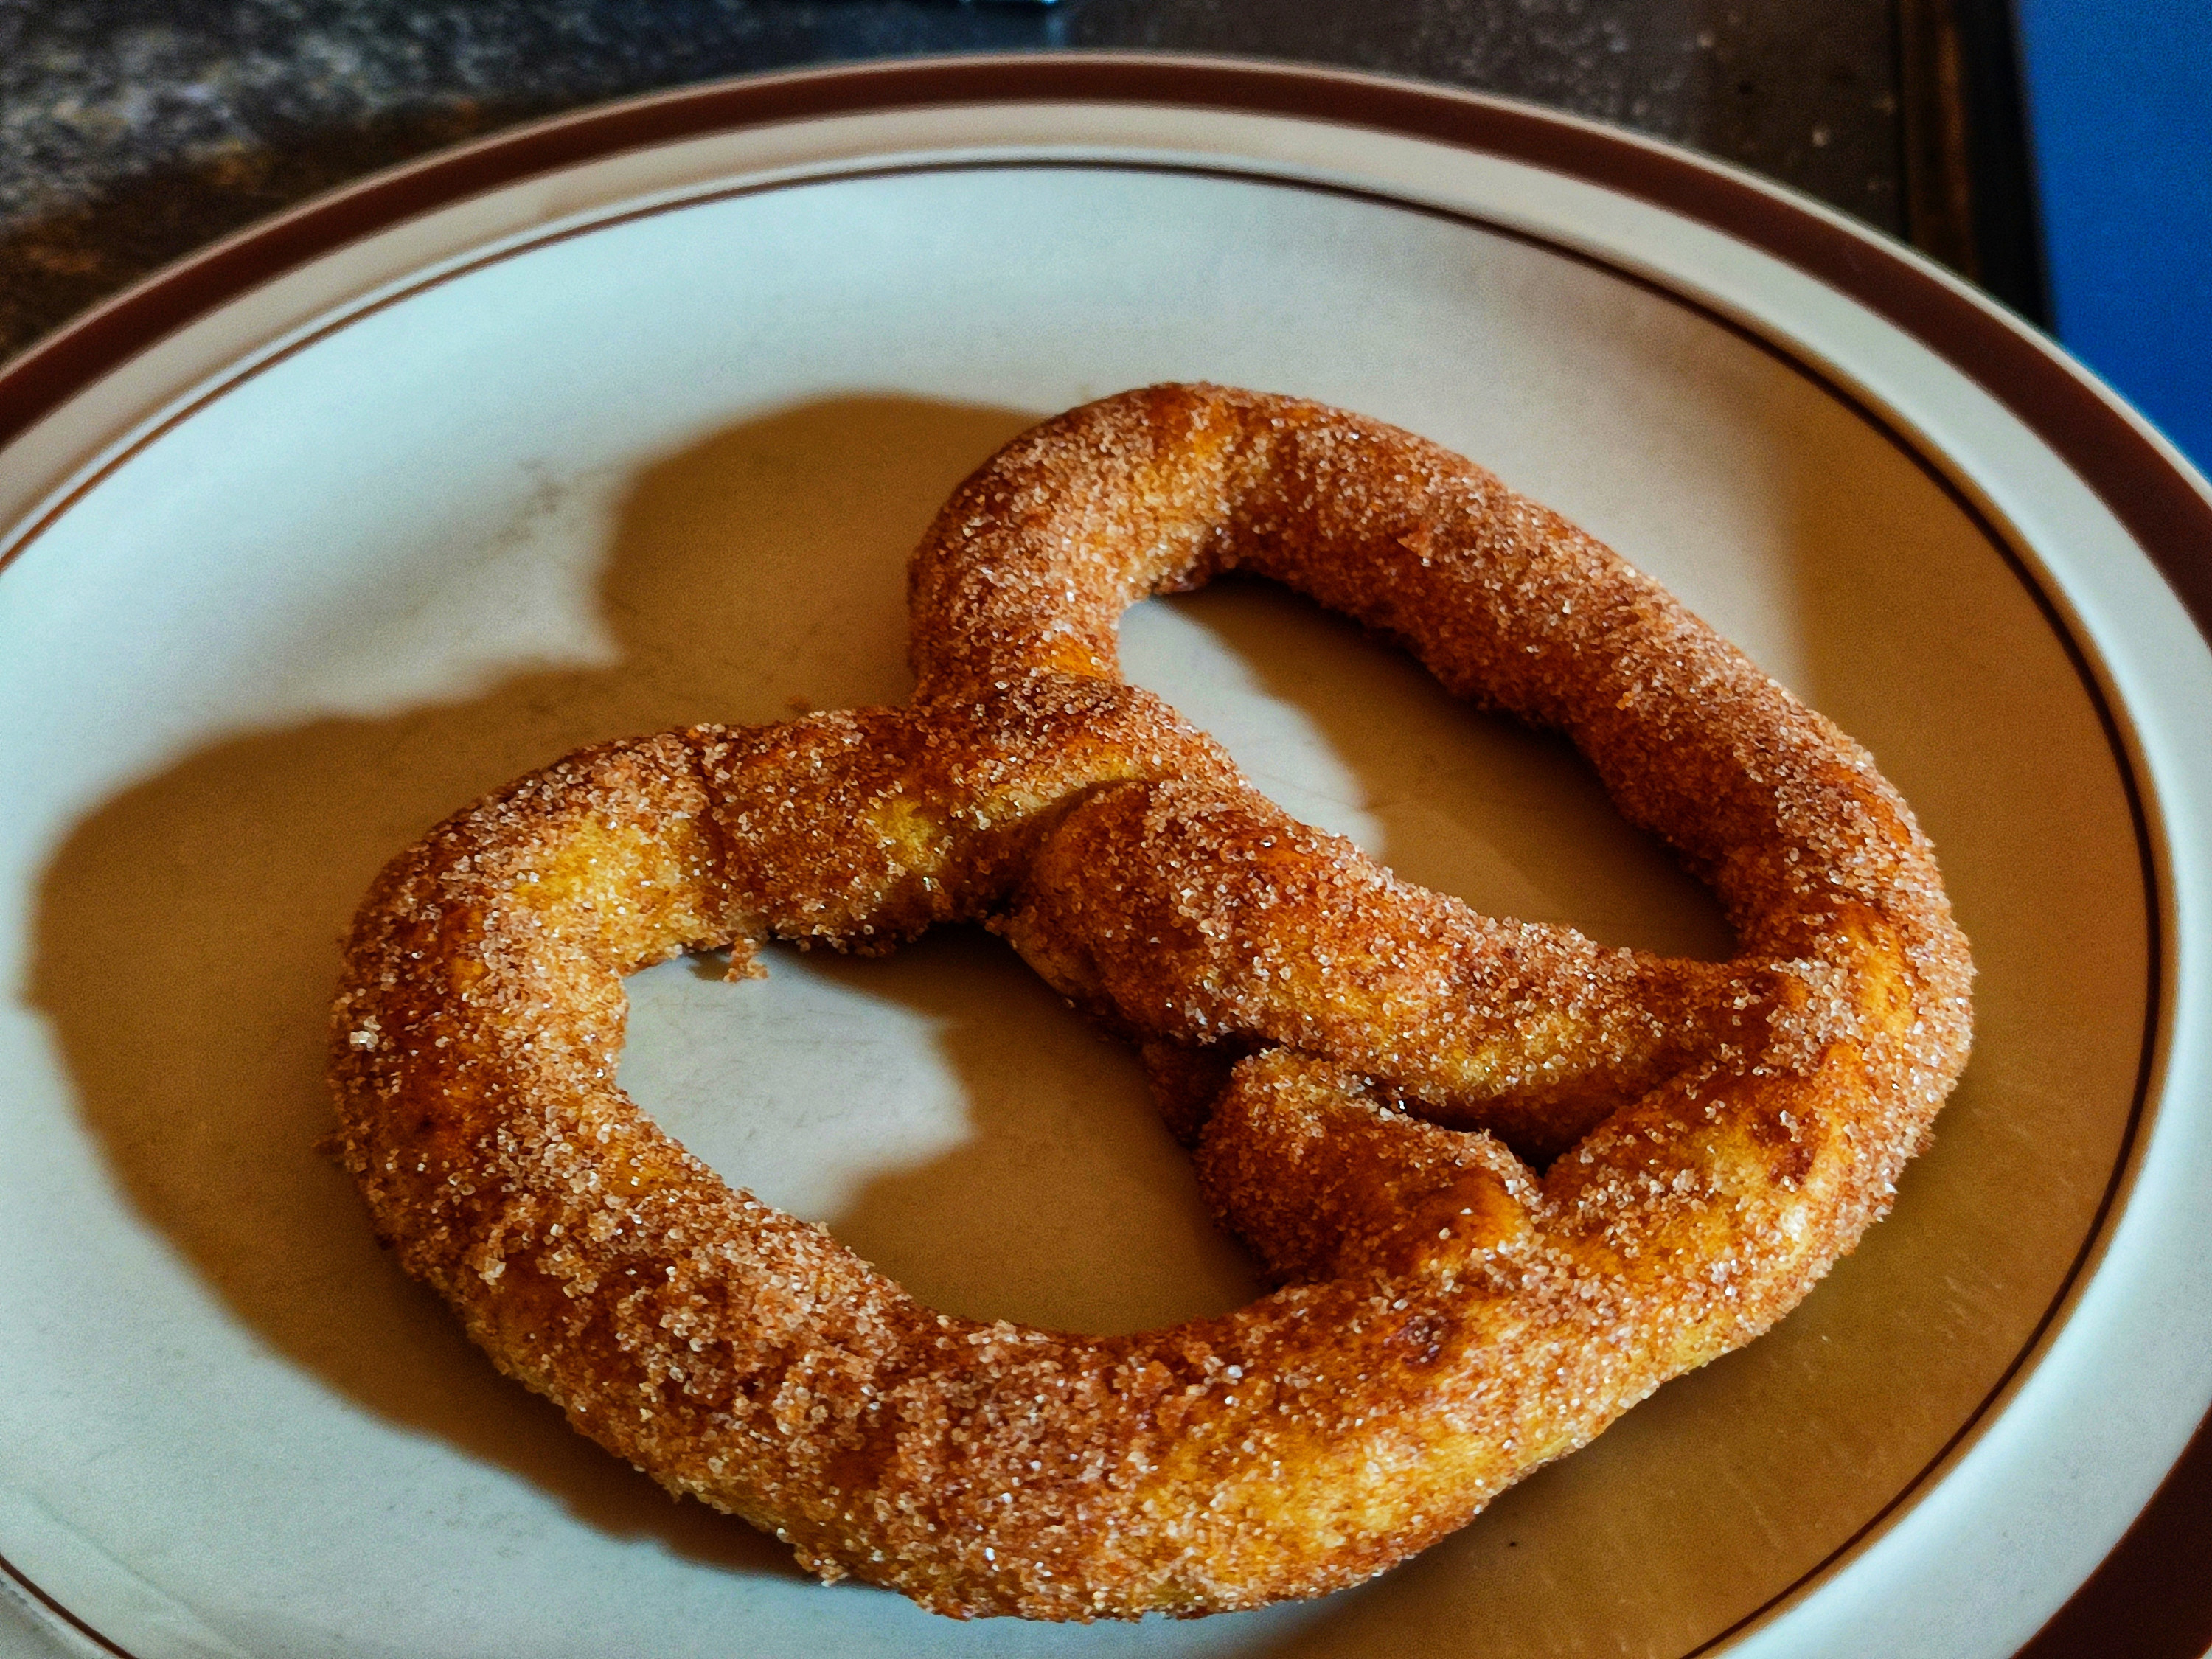 A sugared pretzel sitting on a plate.